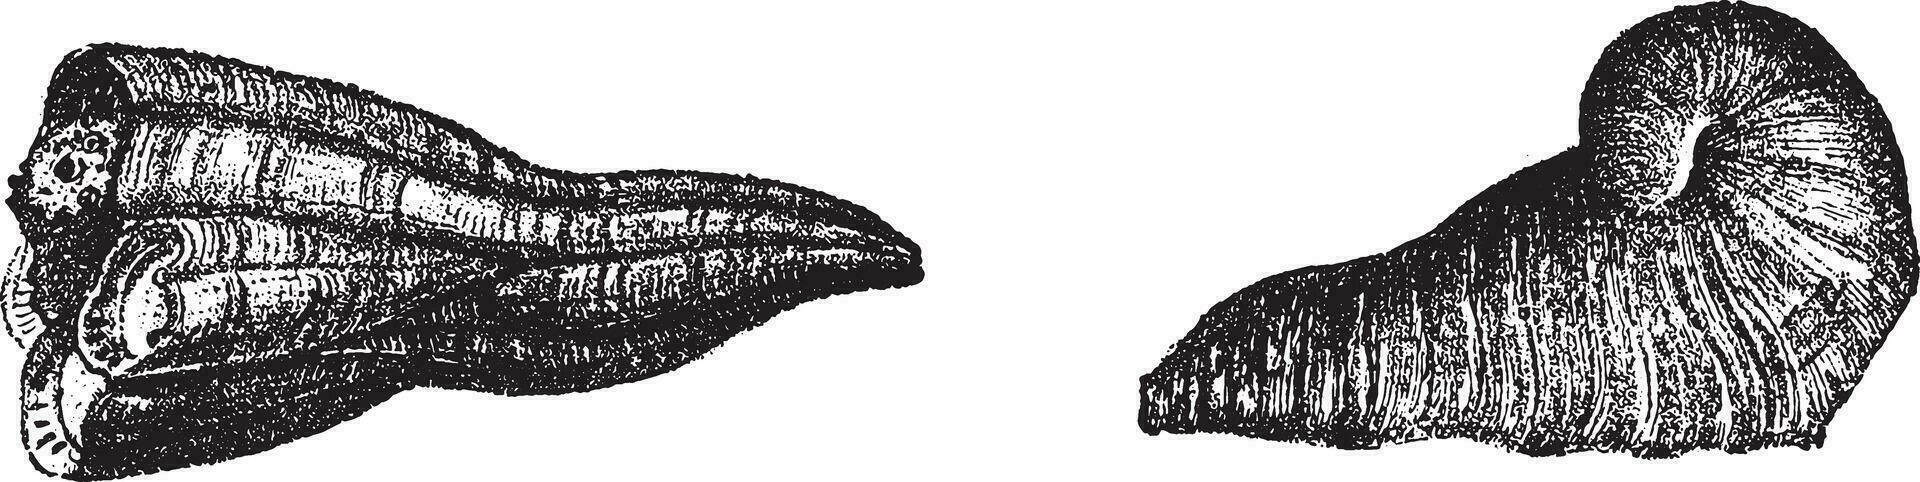 hipuritas o rudistas desde cretáceo terreno, Clásico grabado. vector